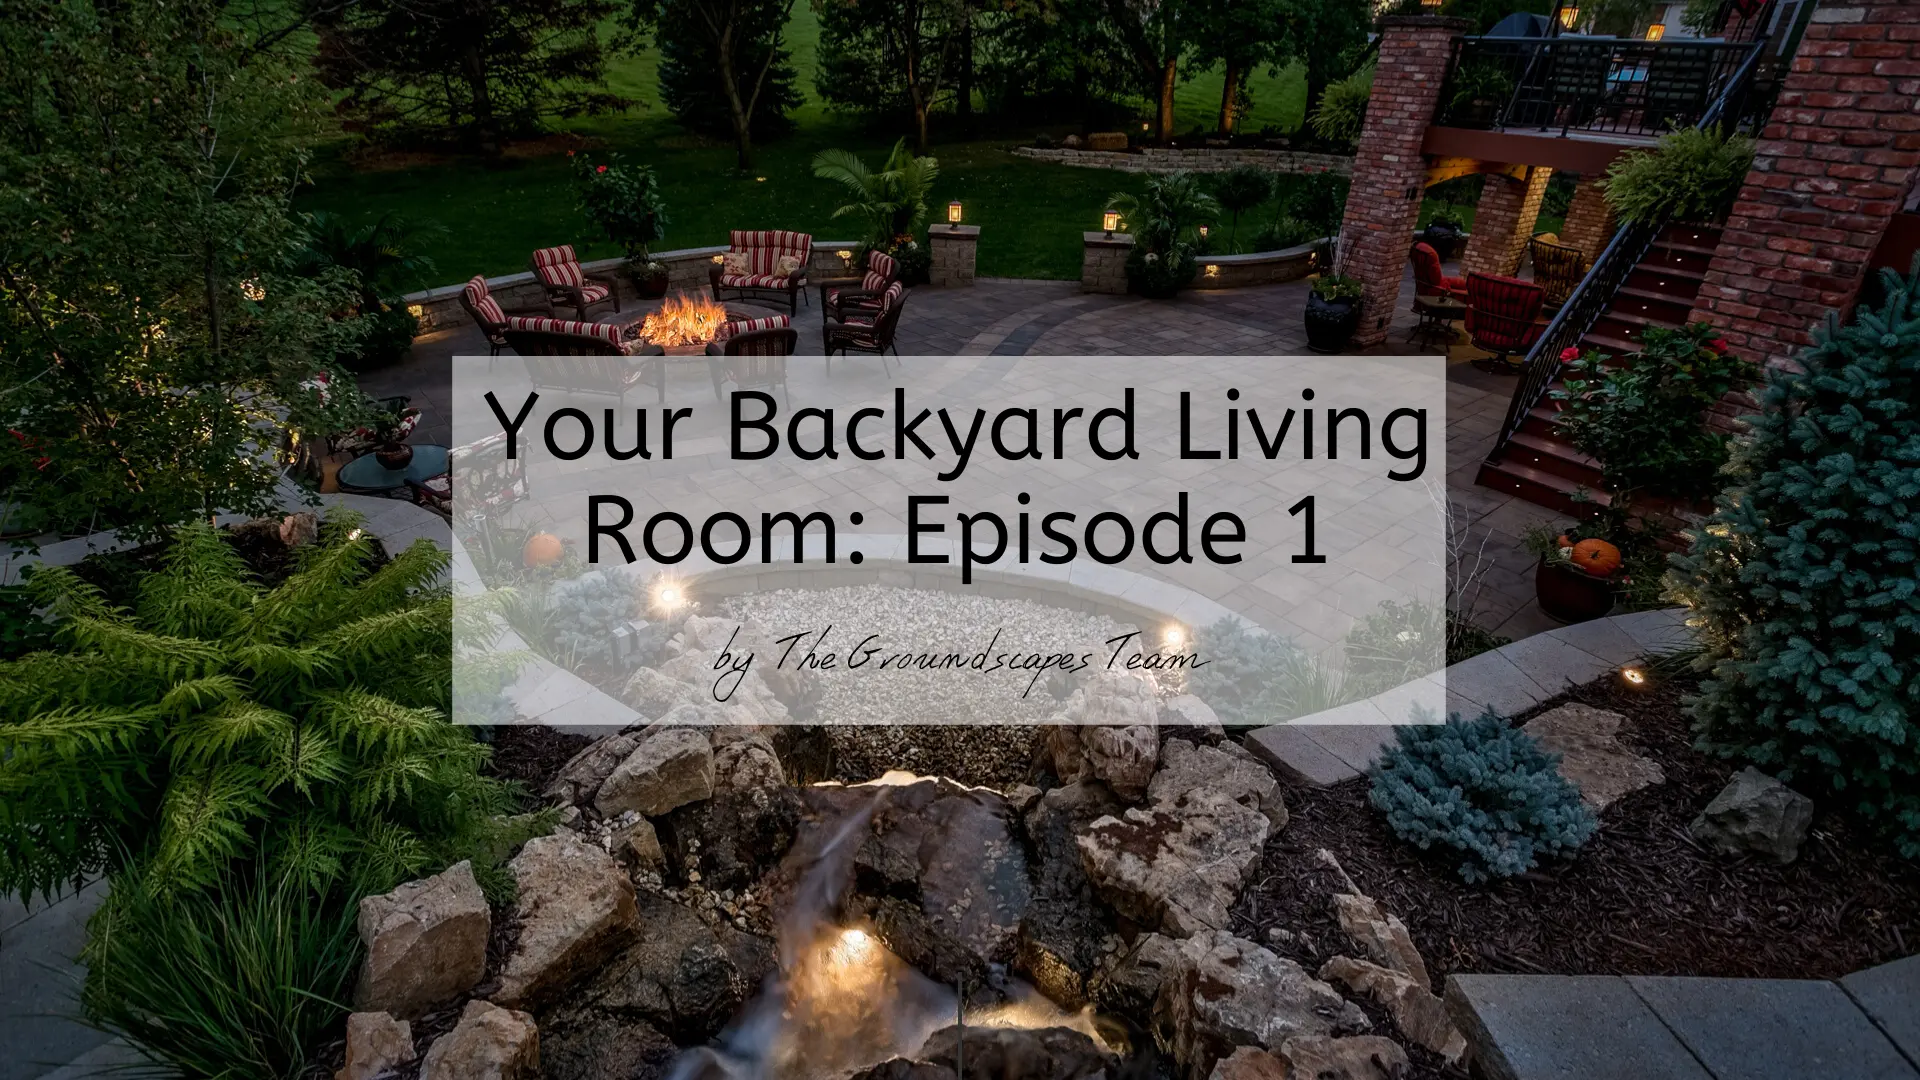 Your Backyard Living Room: Episode 1